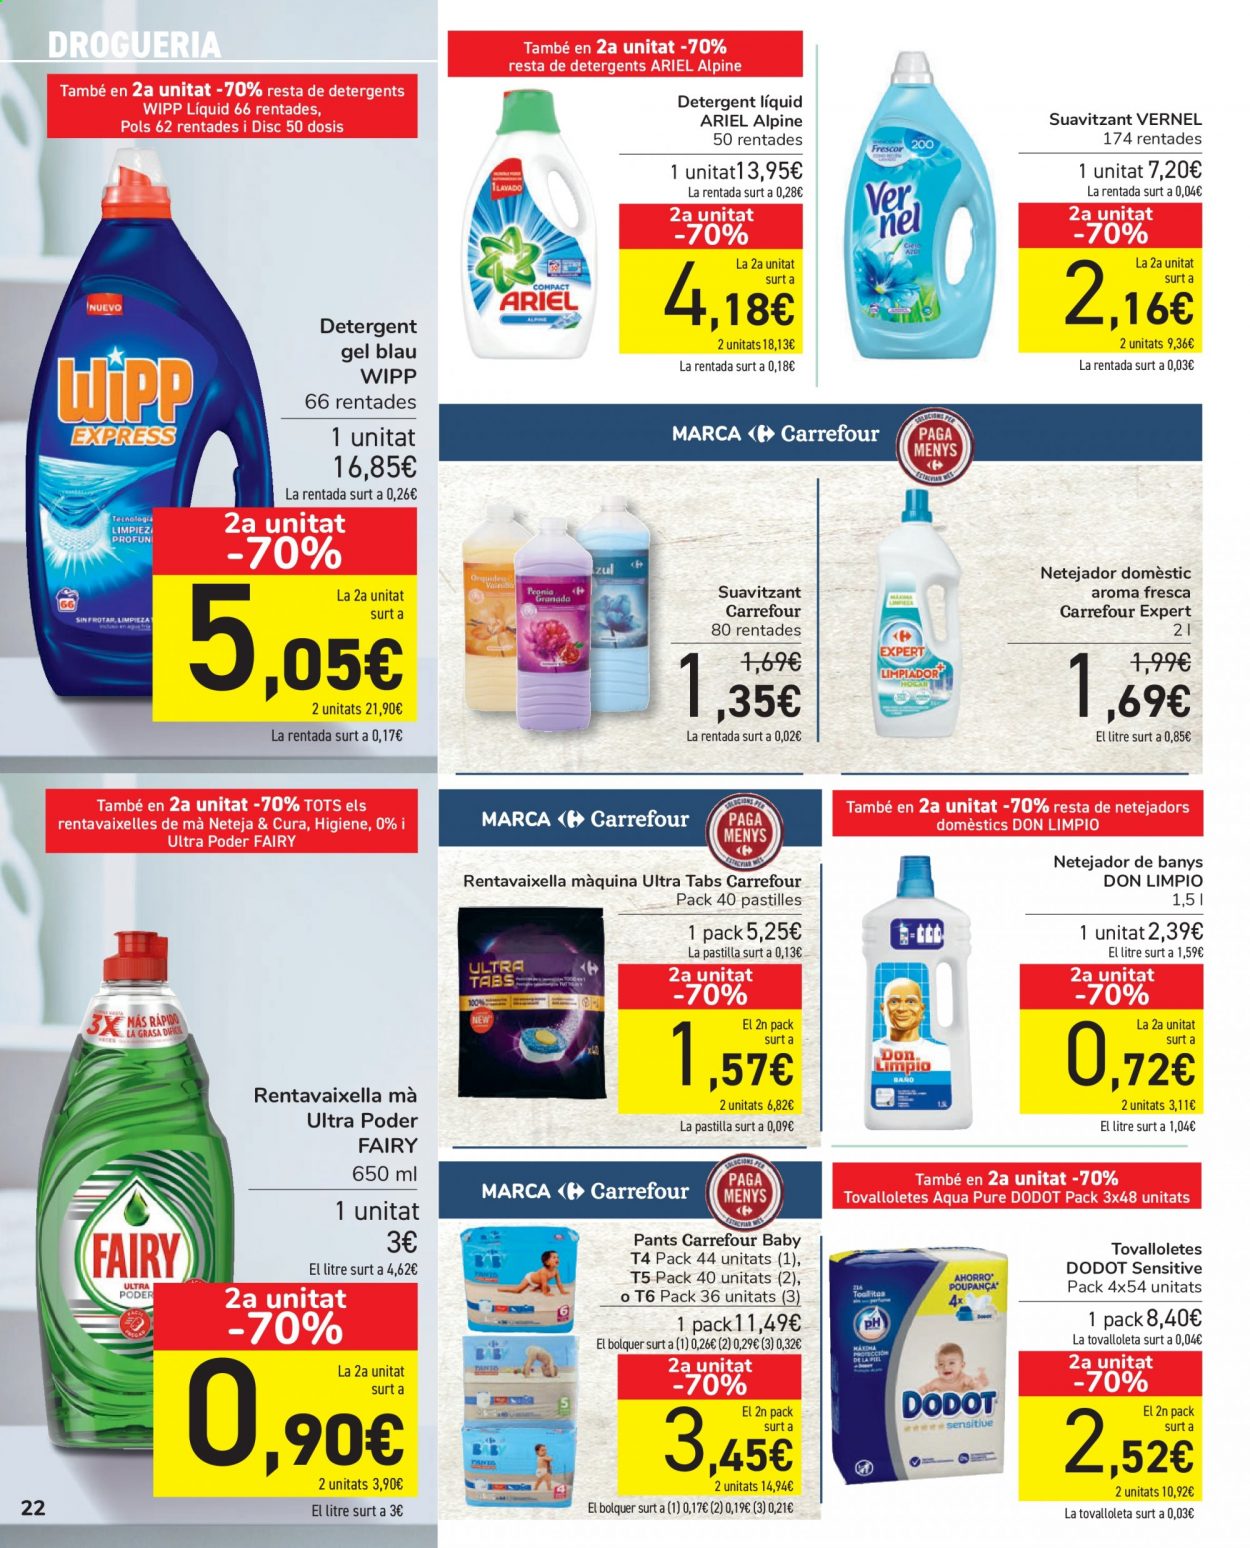 thumbnail - Folleto actual Carrefour - 16/04/21 - 26/04/21 - Ventas - Dodot, Ariel, detergente, Fairy. Página 22.